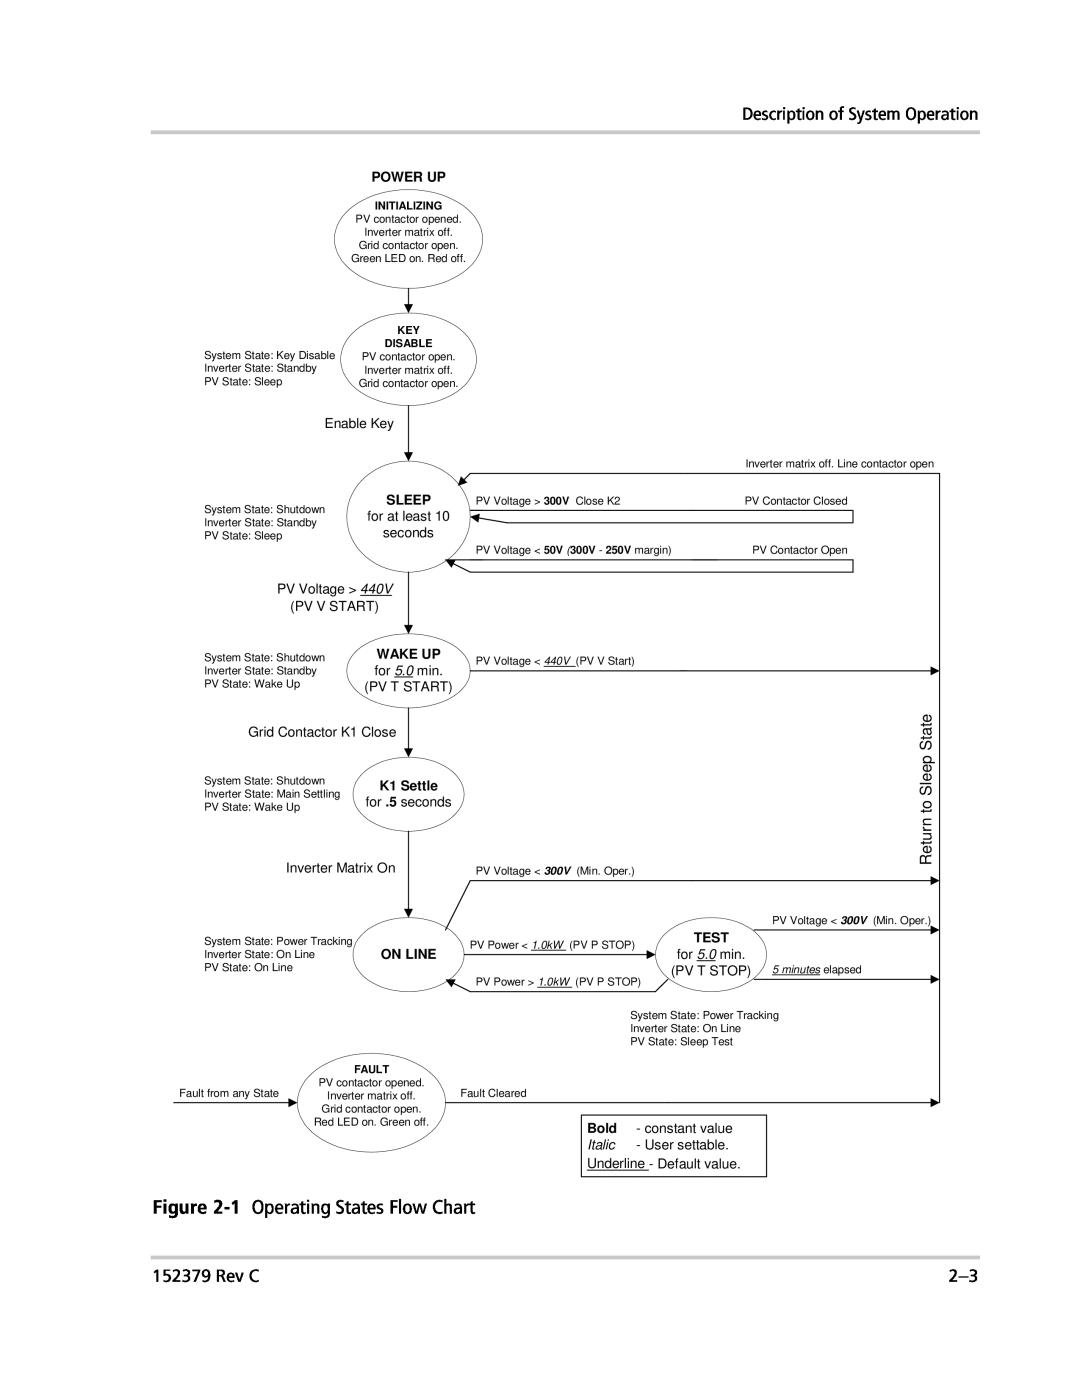 Xantrex Technology PV100S-208 1 Operating States Flow Chart, Description of System Operation, Rev C, Sleep, Return, Test 